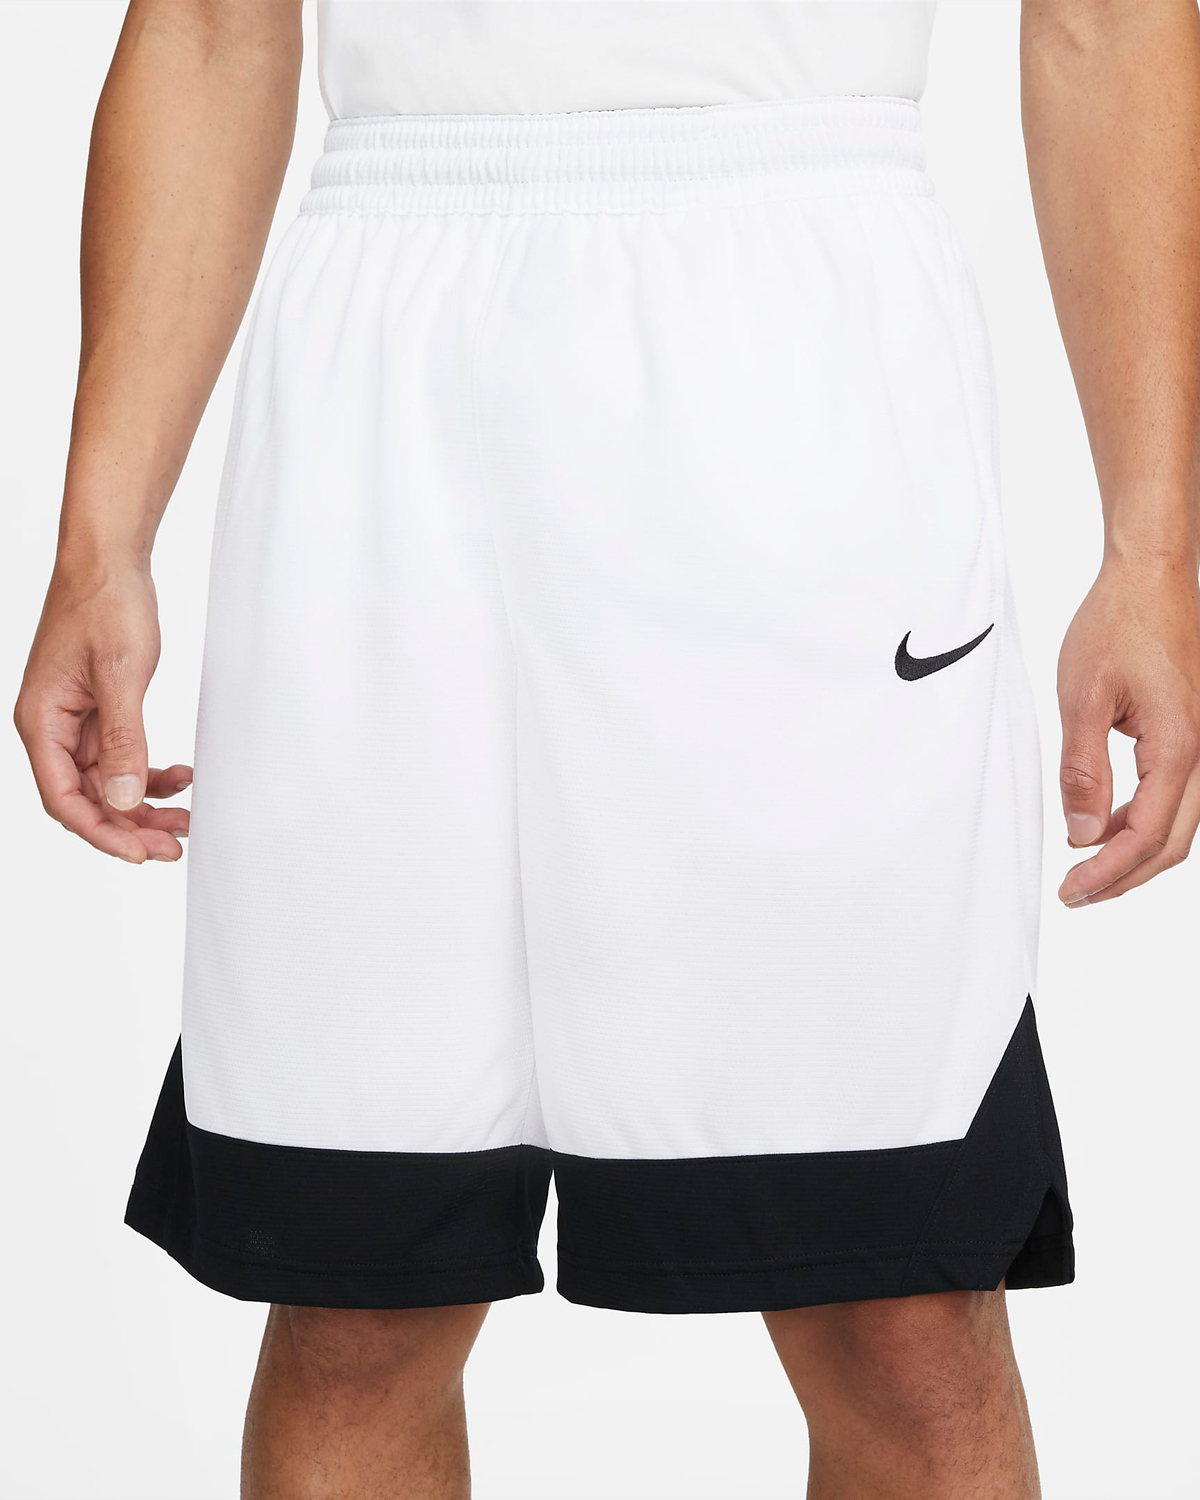 Nike-Dri-FIT-Icon-Basketball-Shorts-White-Black